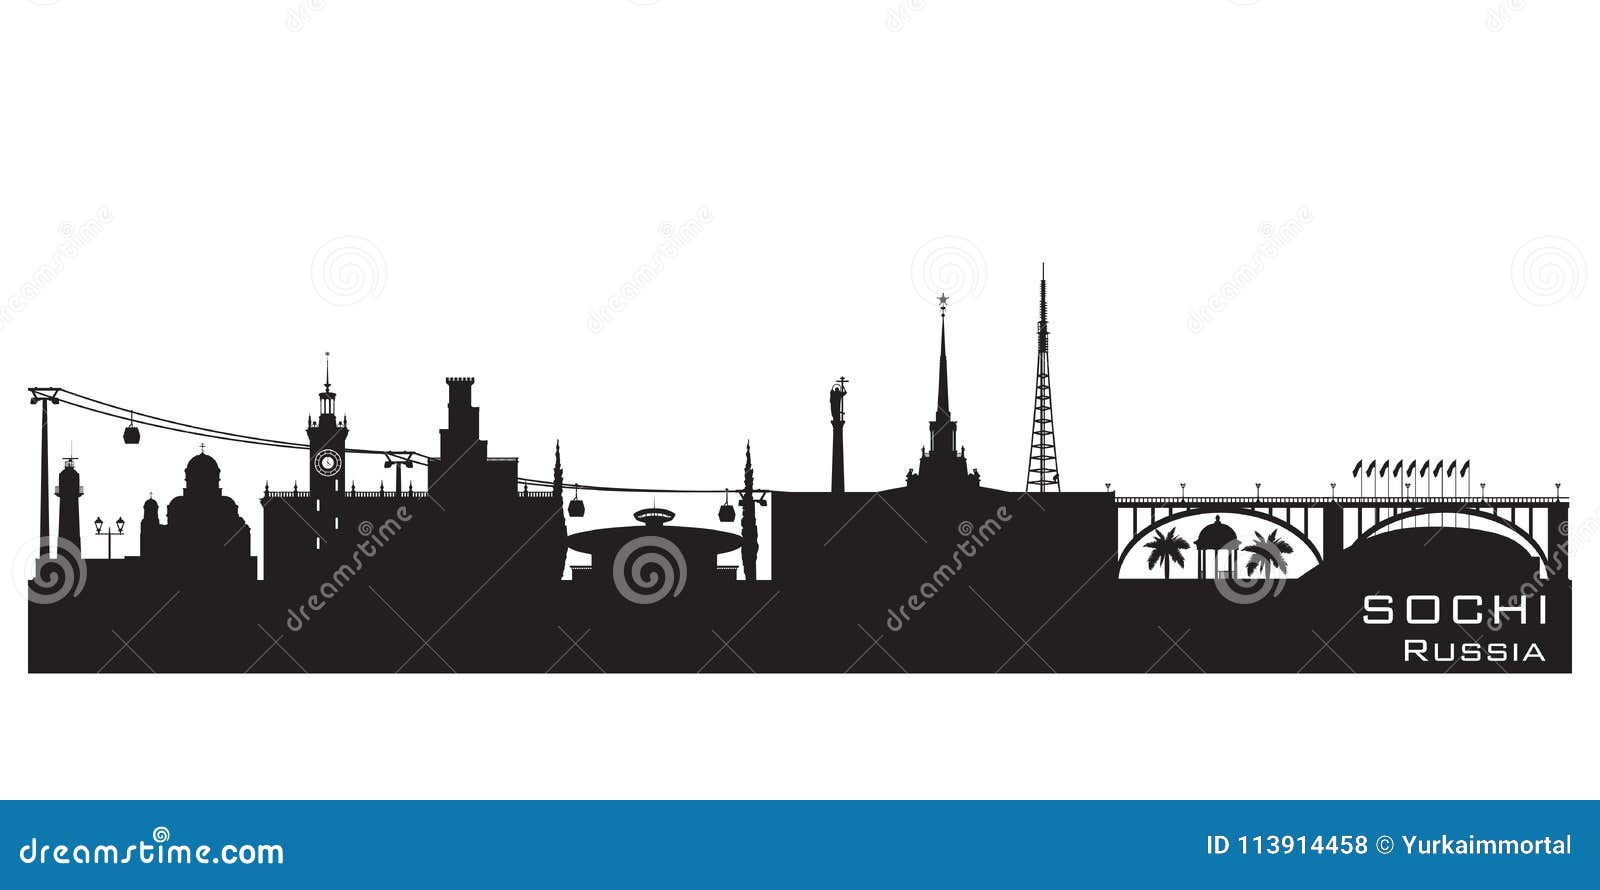 sochi russia city skyline detailed silhouette